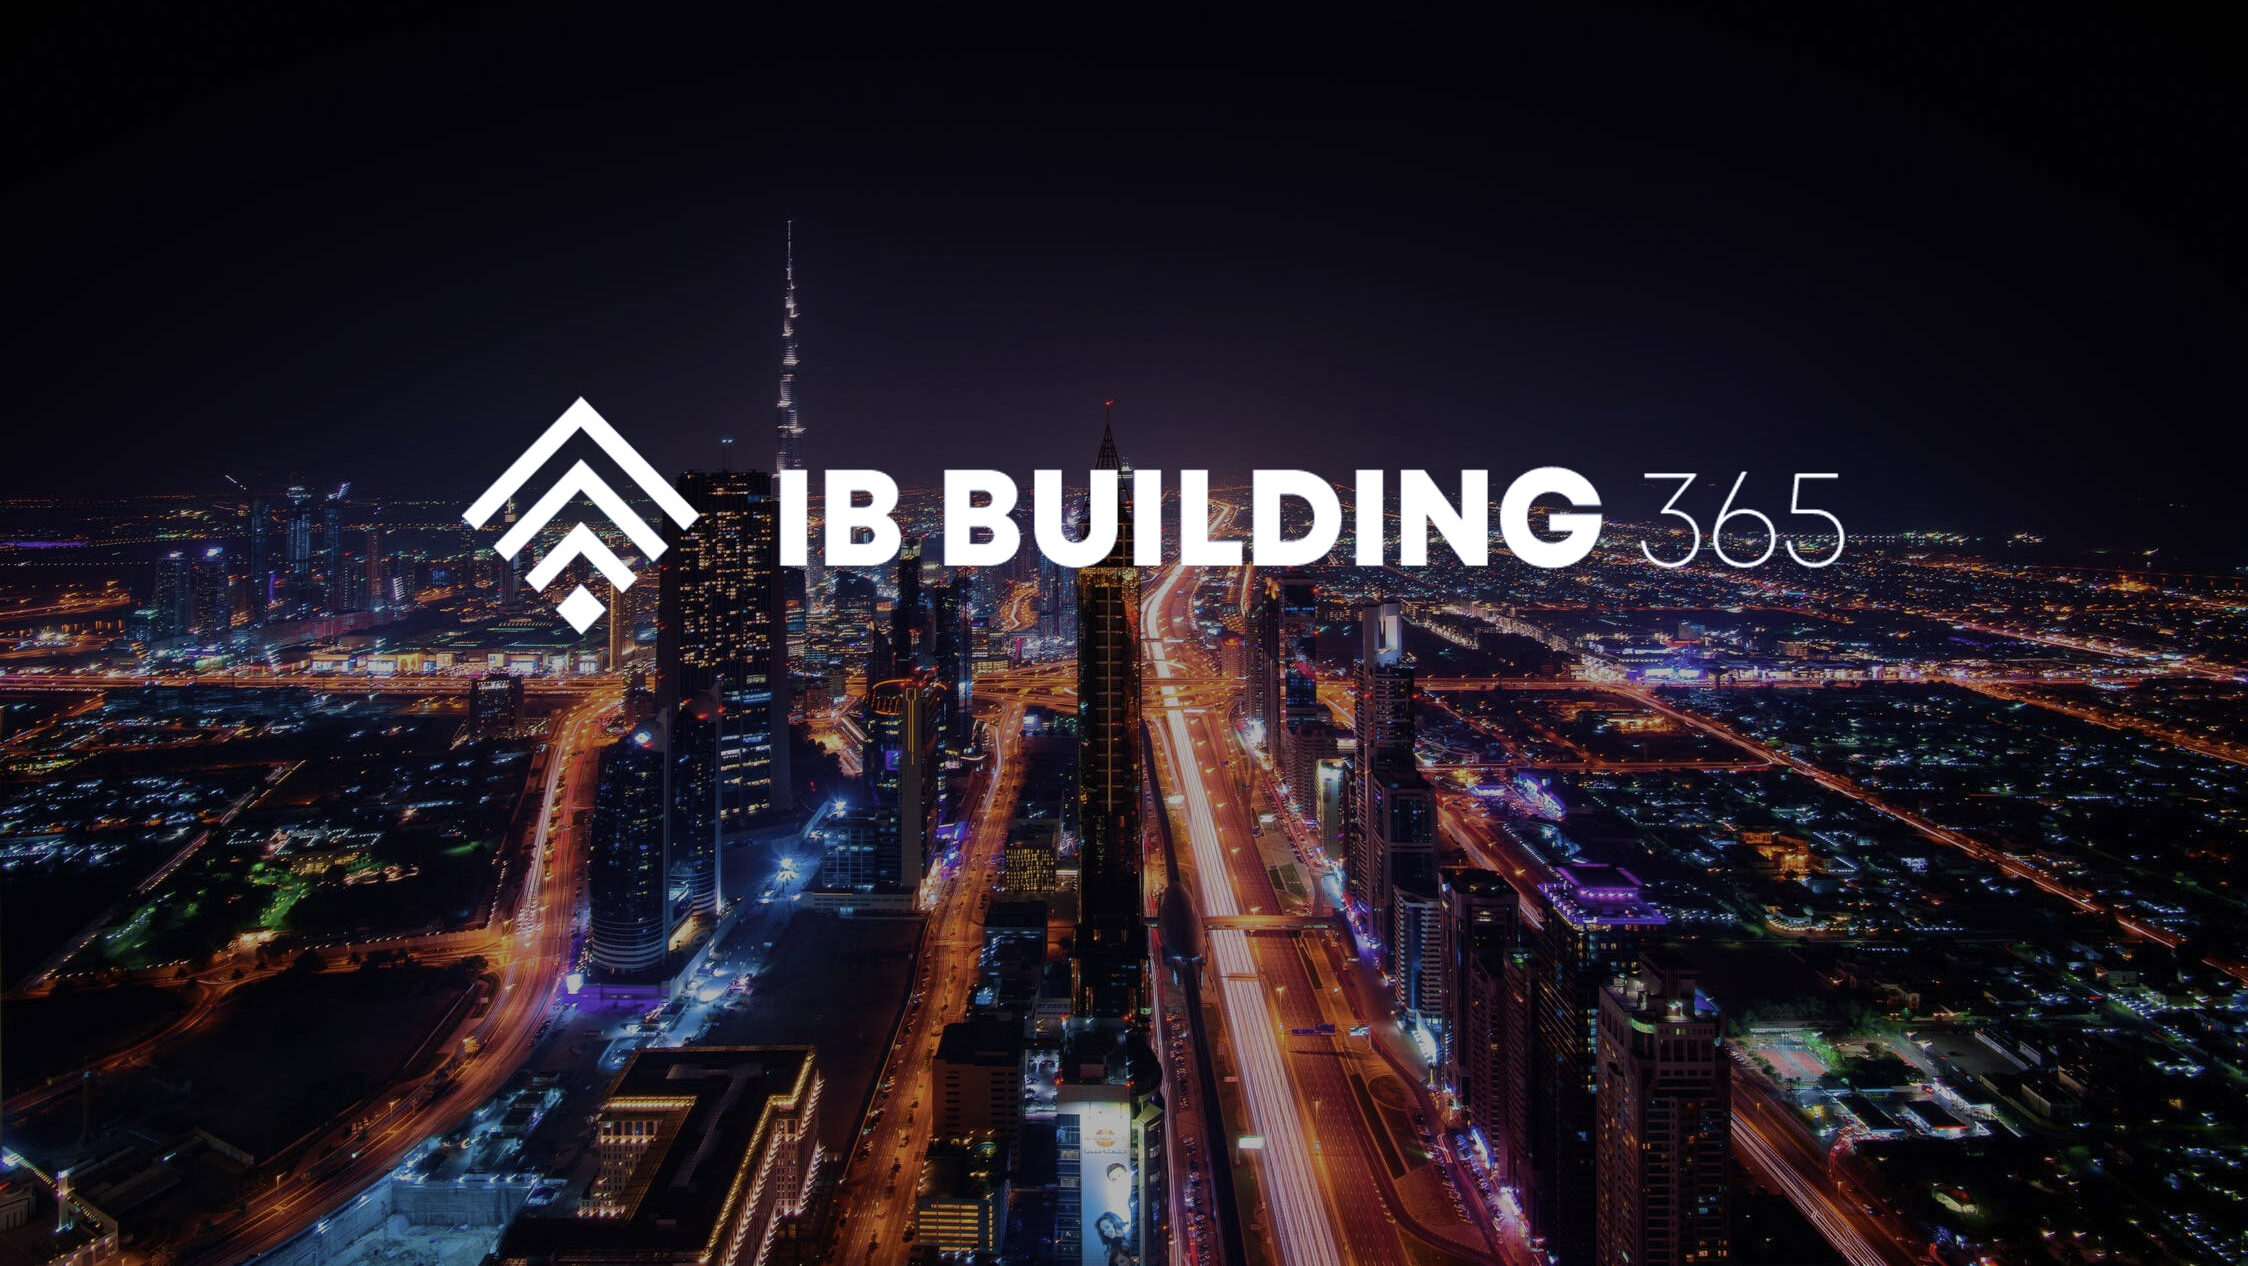 IB Building 365 para Microsoft Dynamics 365 Business Central